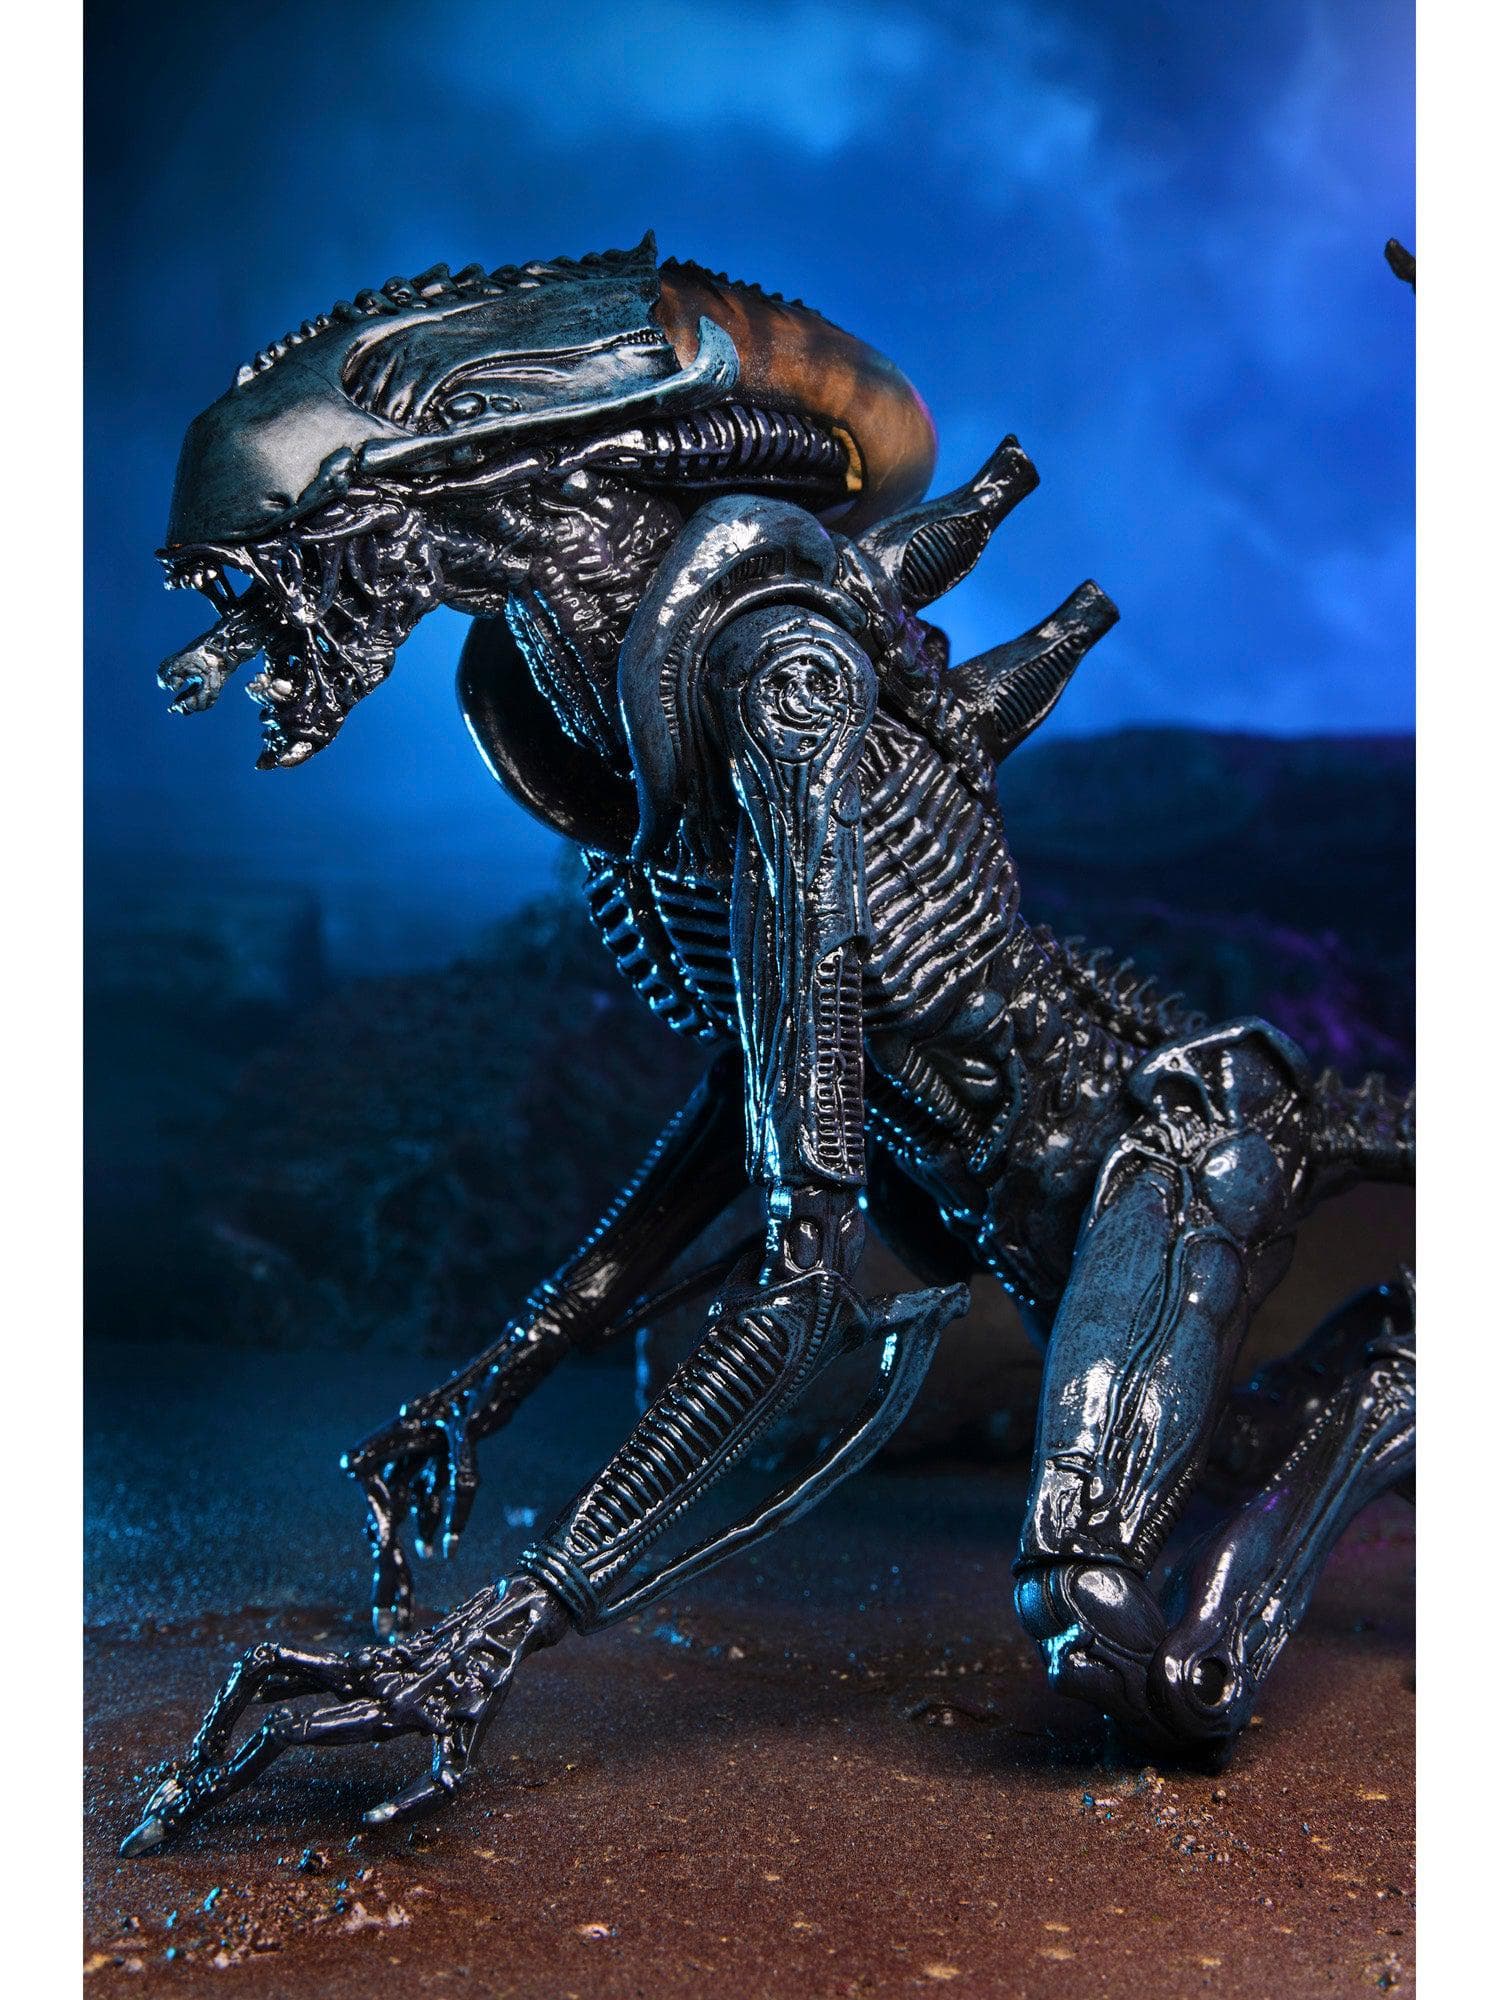 NECA - Alien vs Predator - 7" Scale Action Figure - Arachnoid Alien (Movie Deco) - costumes.com